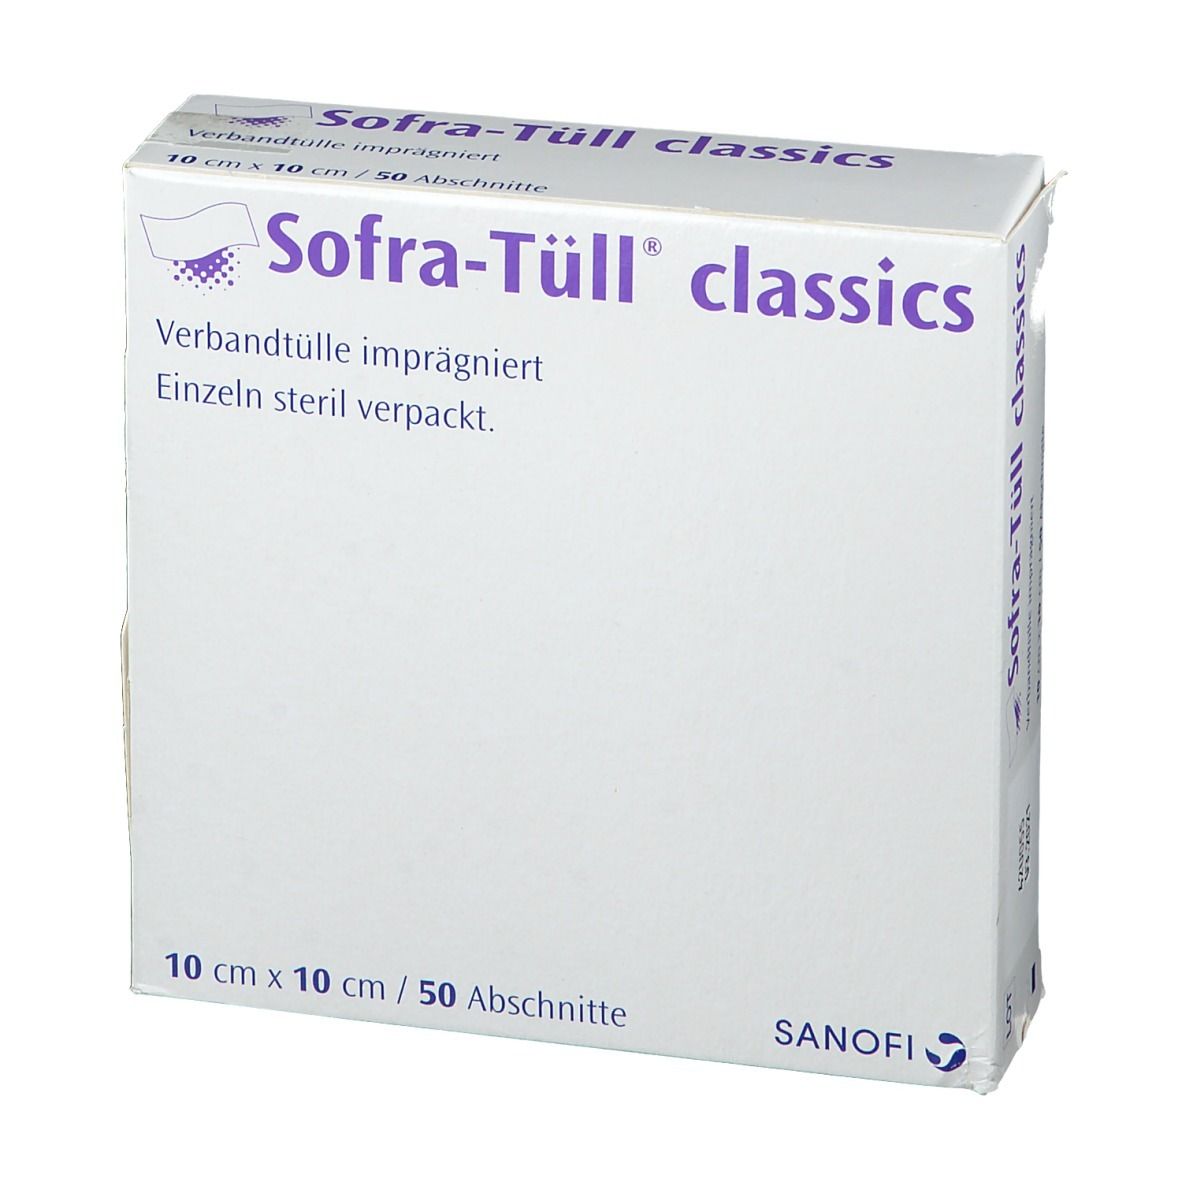 Sofra-Tüll® classics 10cm x 10cm